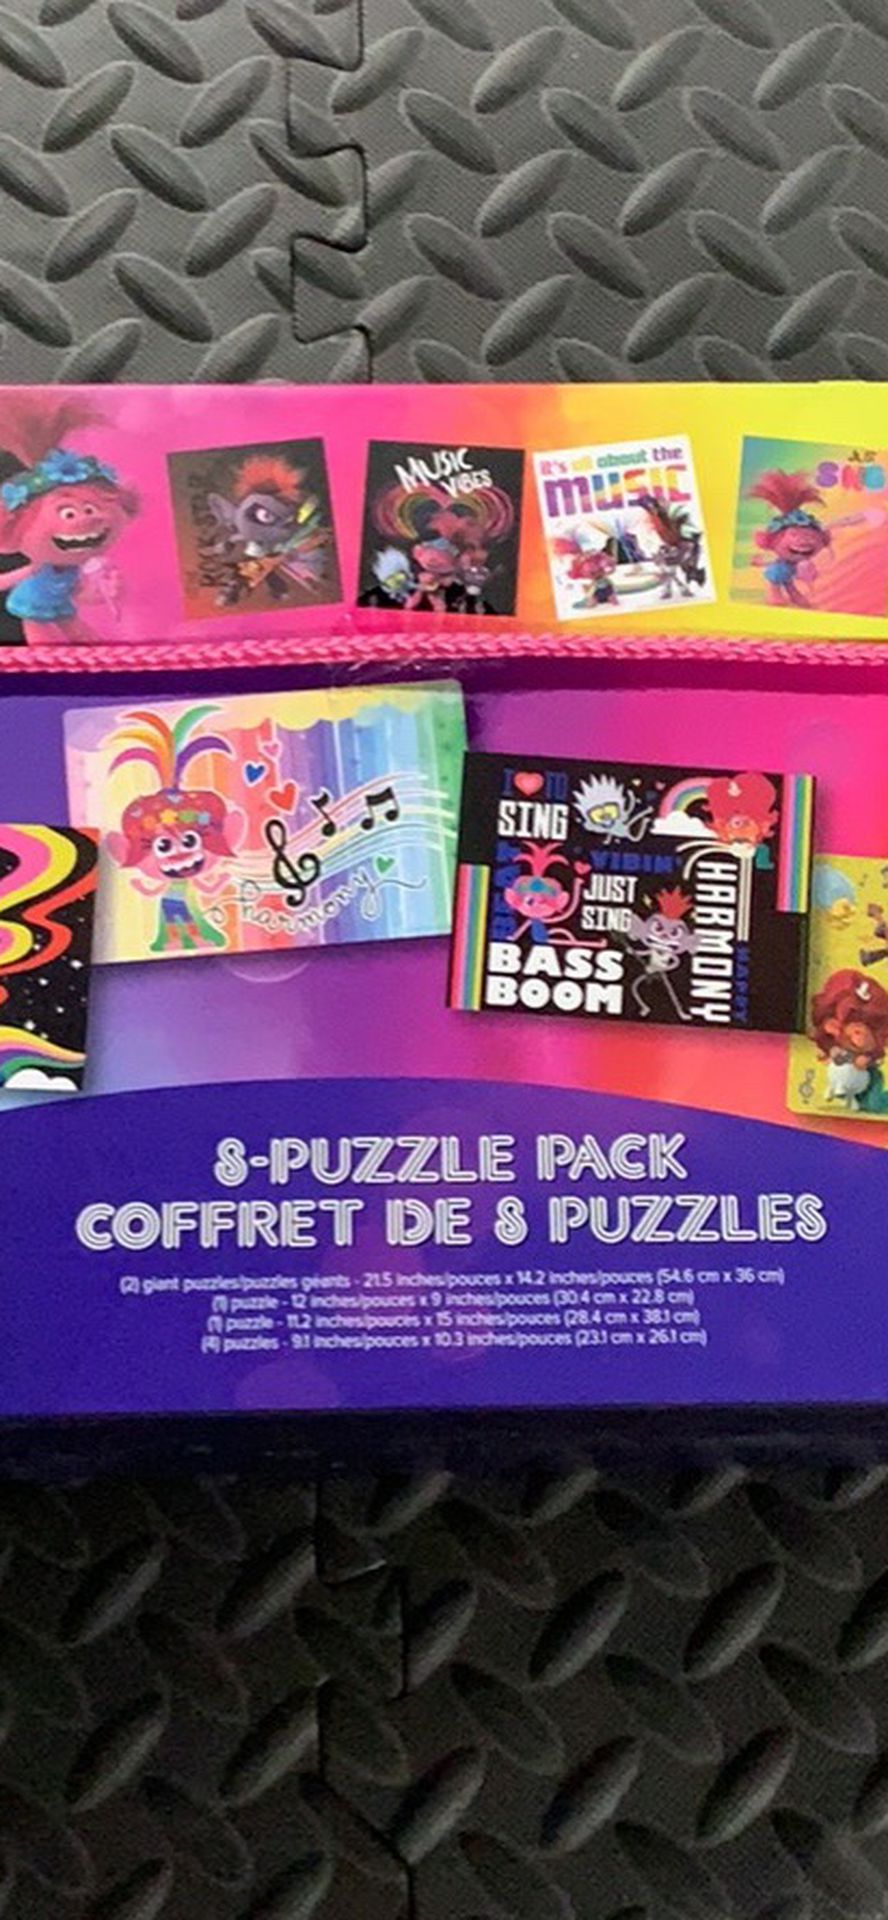 New Trolls World Tour 8-Puzzle Pack Box